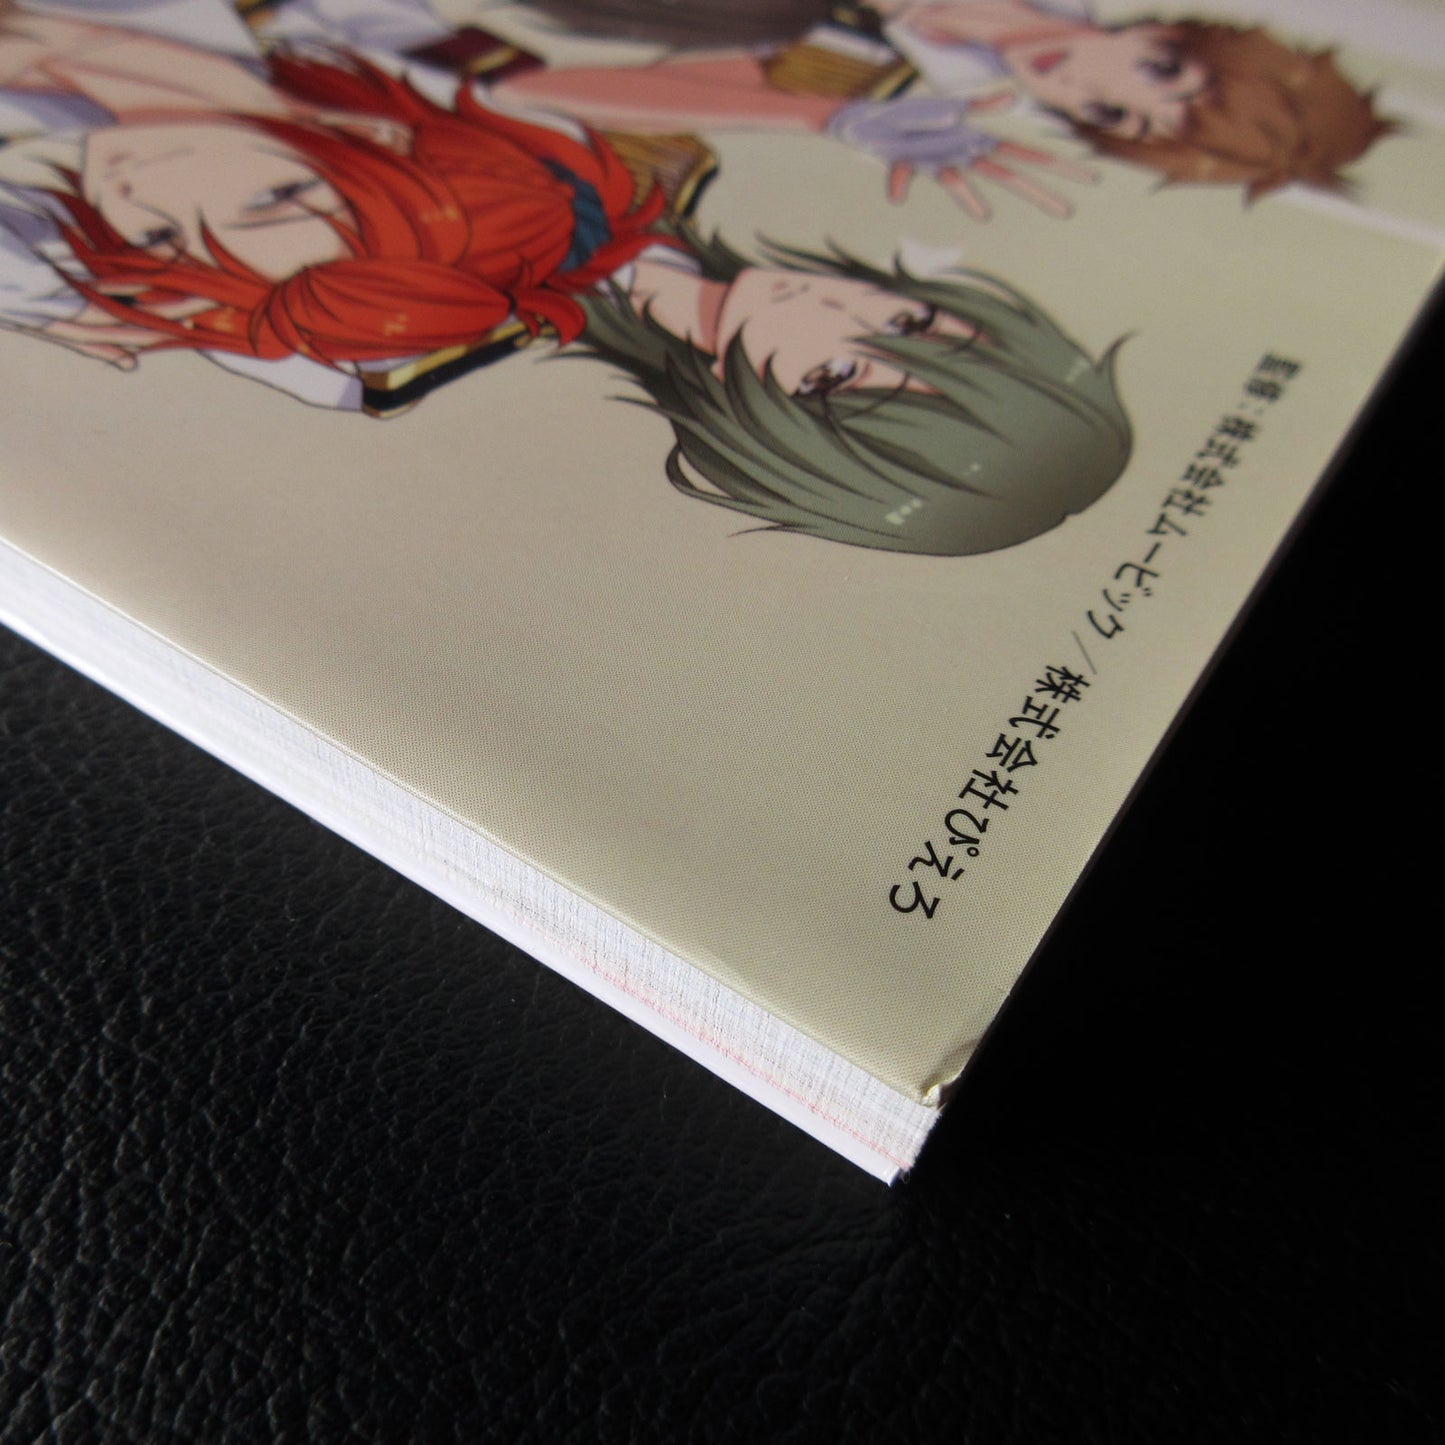 Tsukiuta. The Animation Official Fan Book